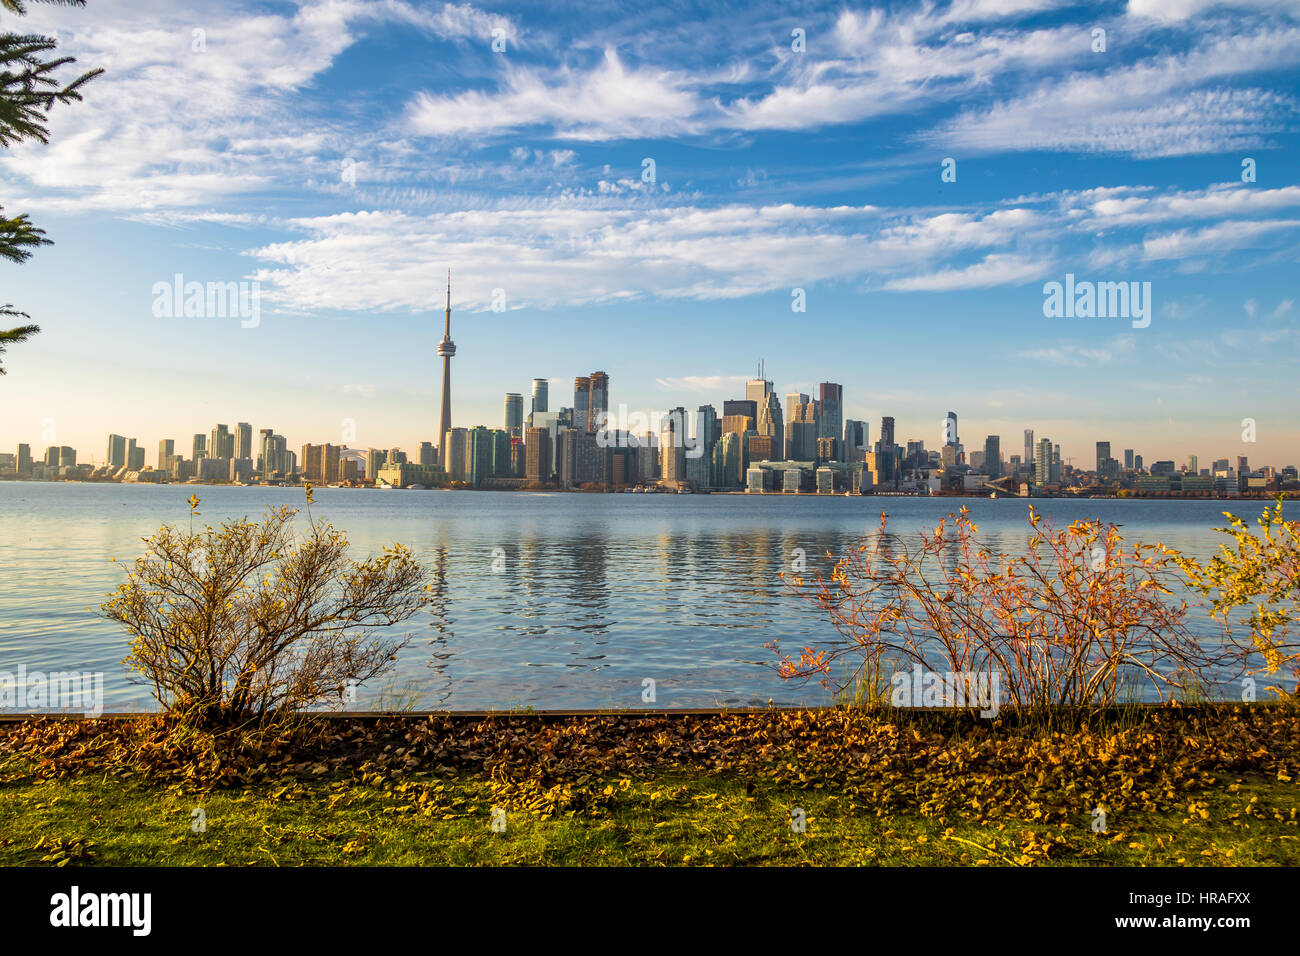 Toronto Skyline with autumn vegetation - Toronto, Ontario, Canada Stock Photo